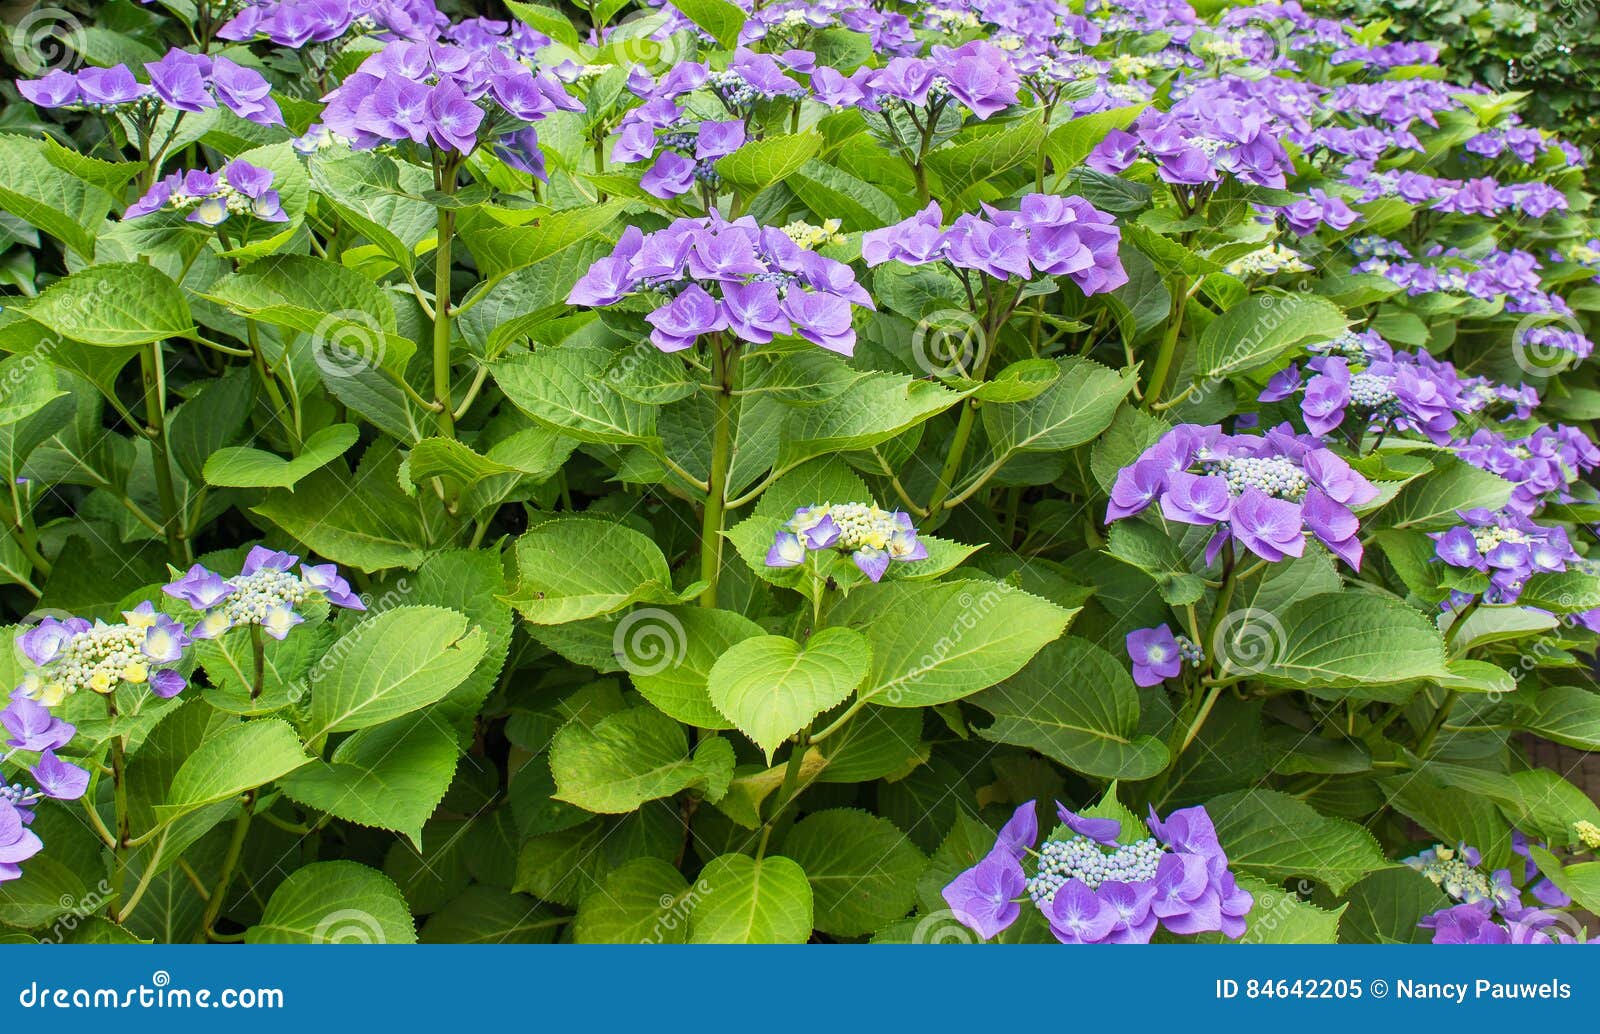 hortensia blue - hydrangea macrophylla `blaumeise`